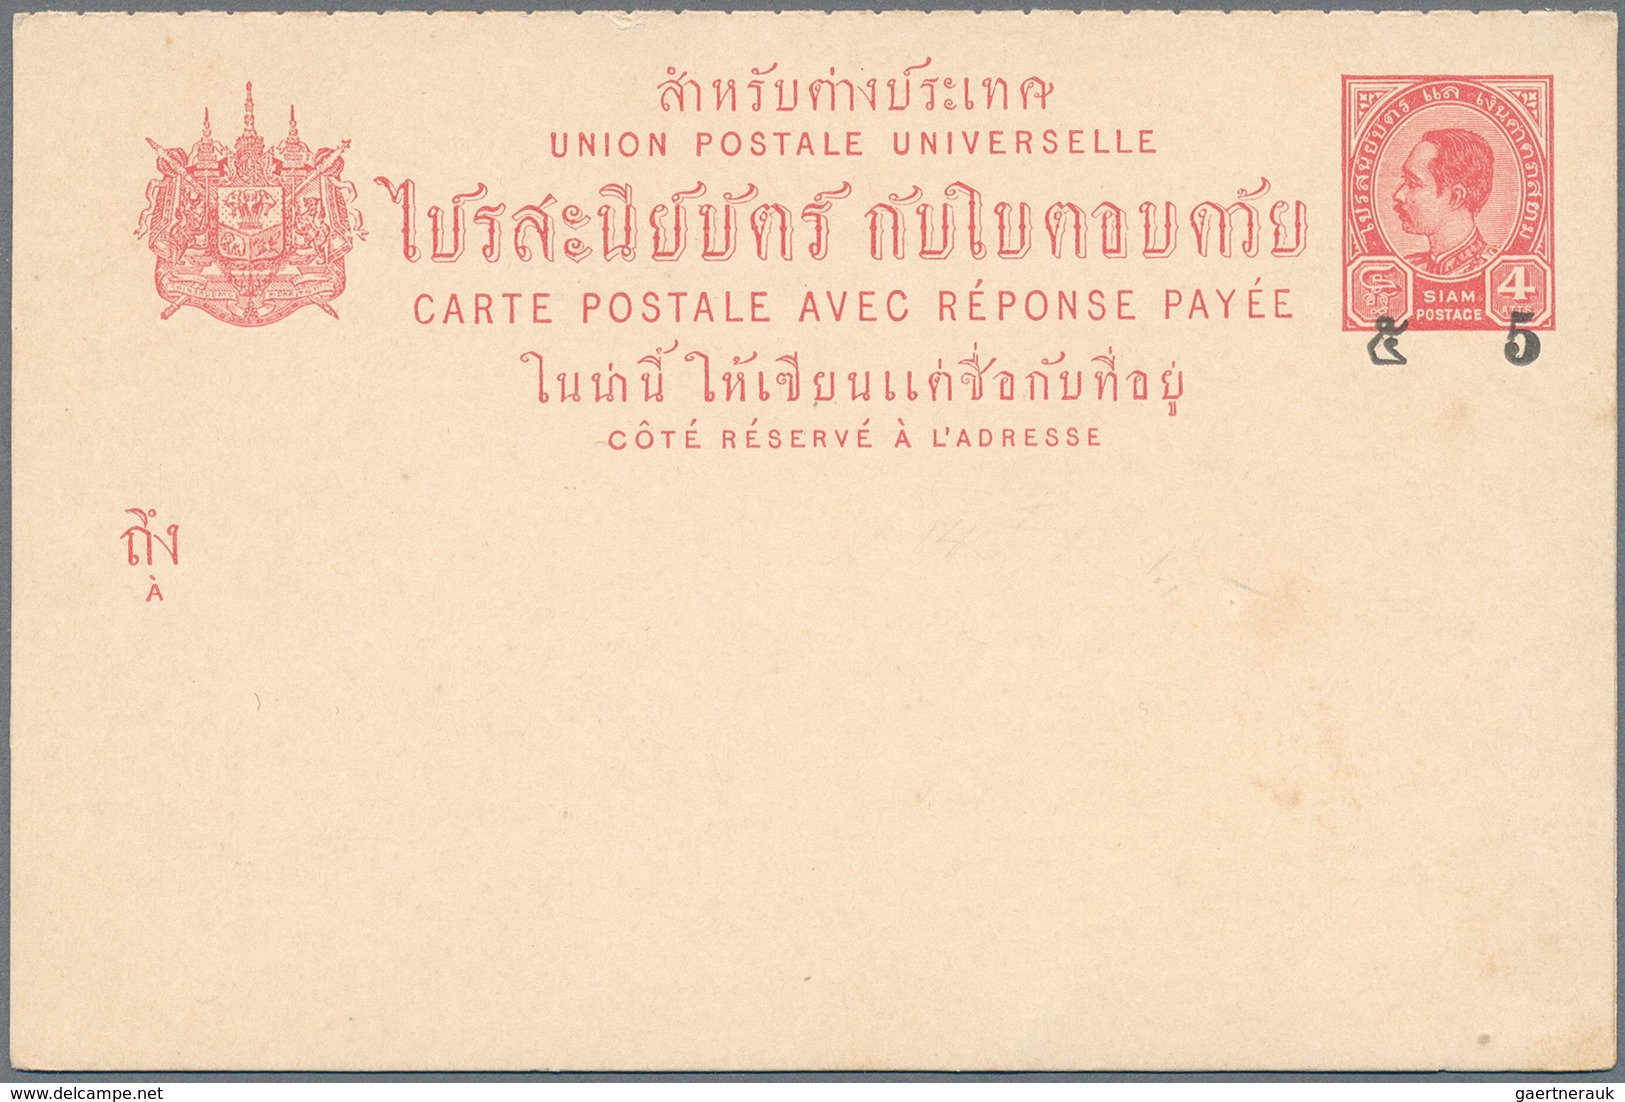 Thailand - Ganzsachen: 1883/1985, 63 (ca.) postal stationary cards, envelopes and aerogrammes unused